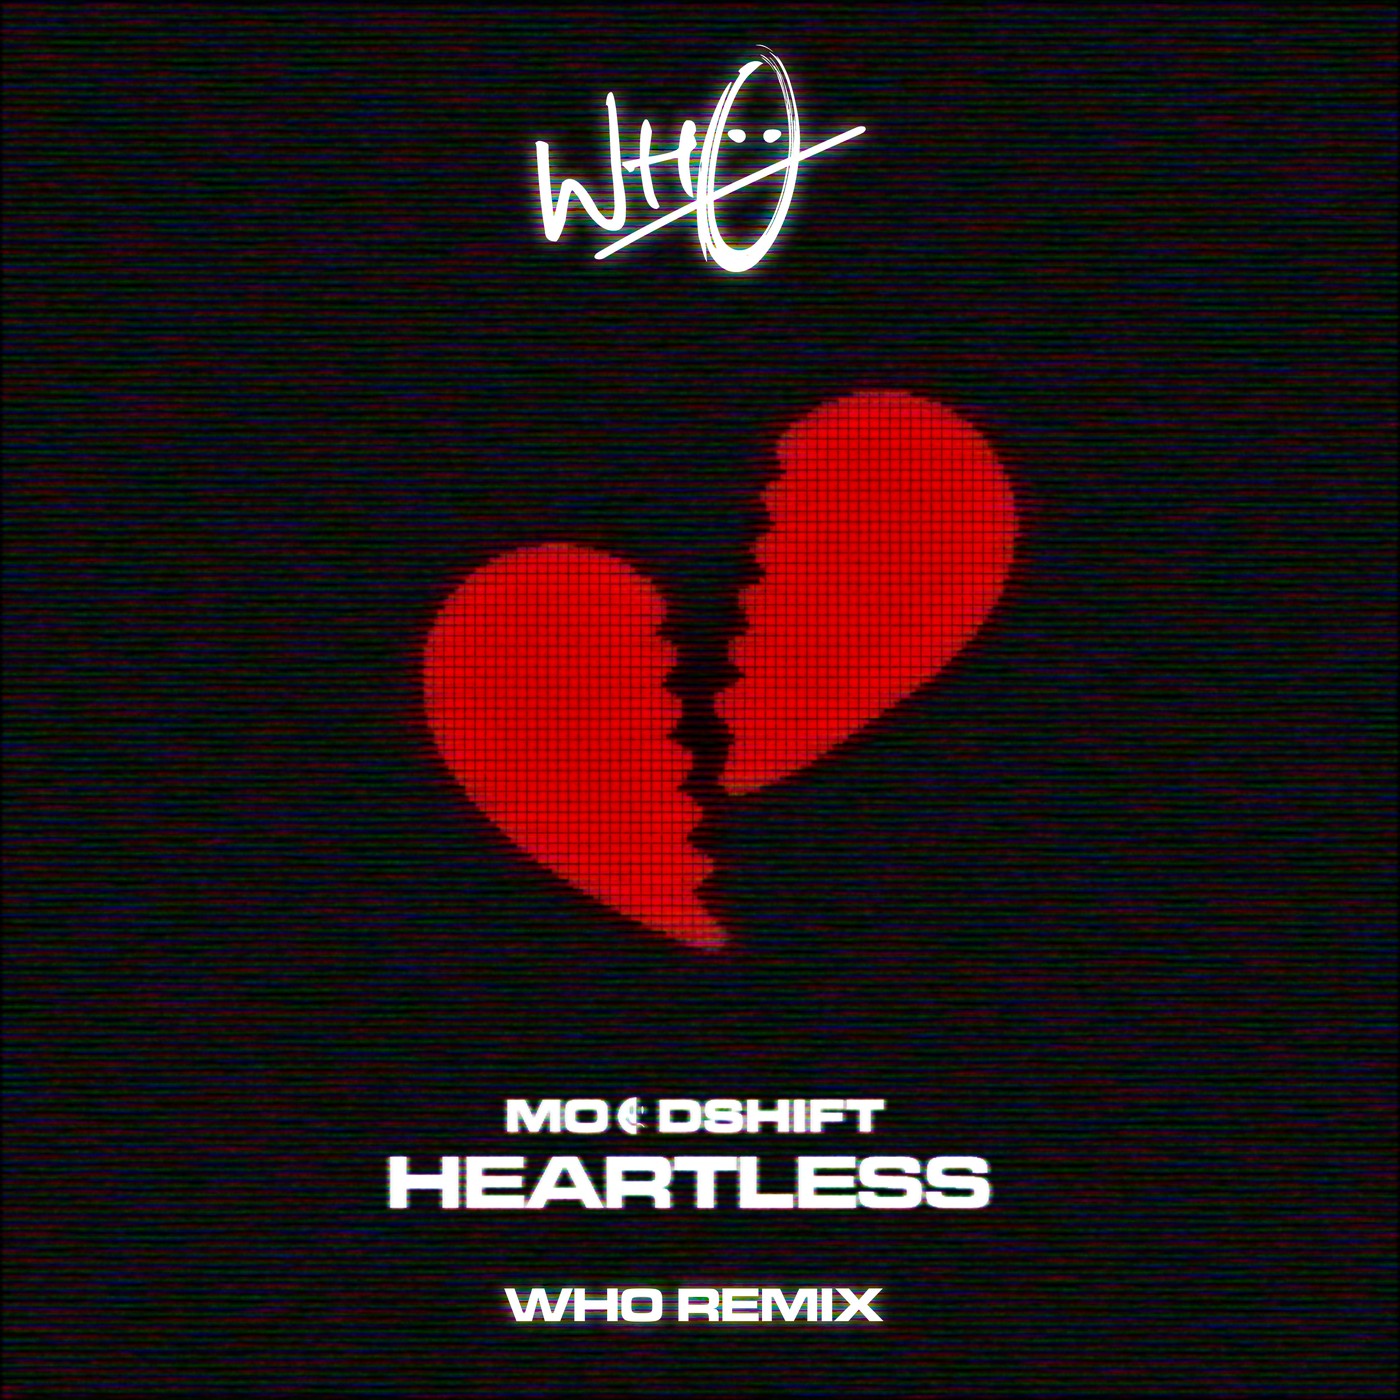 Moodshift - Heartless (Wh0 Remix)